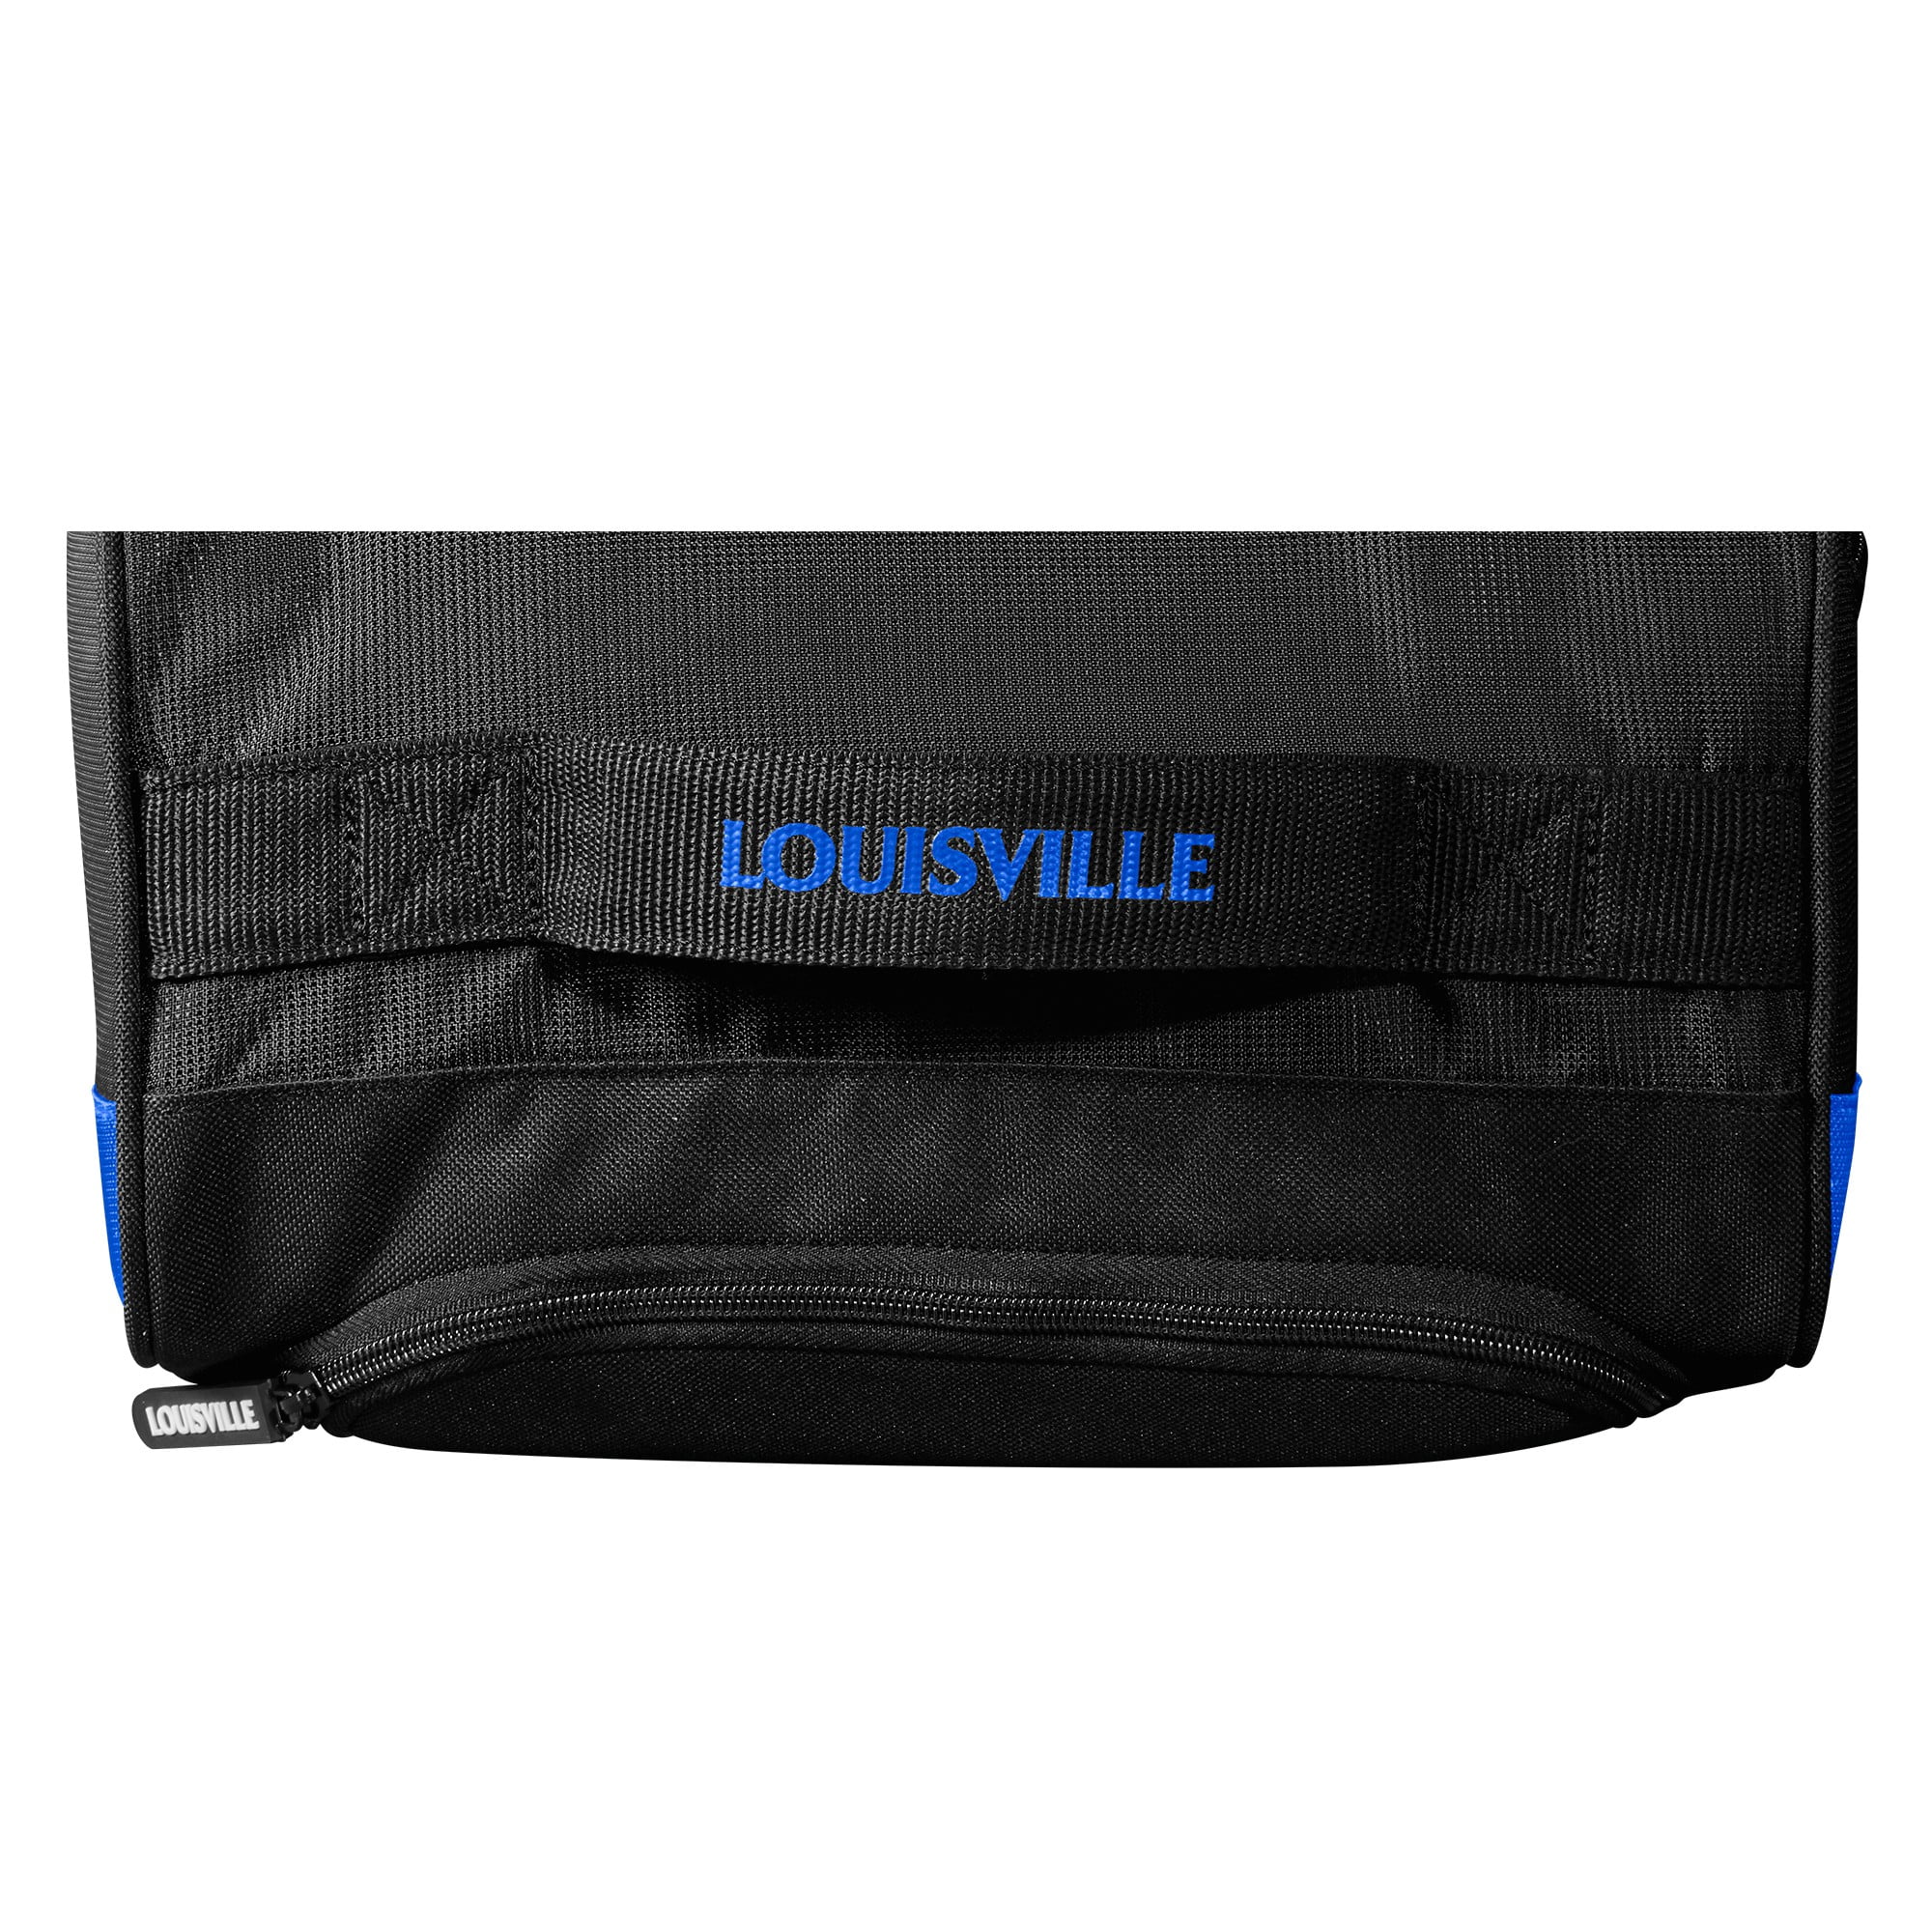 Louisville Slugger Omaha Rig Wheeled Bag, Black and Royal